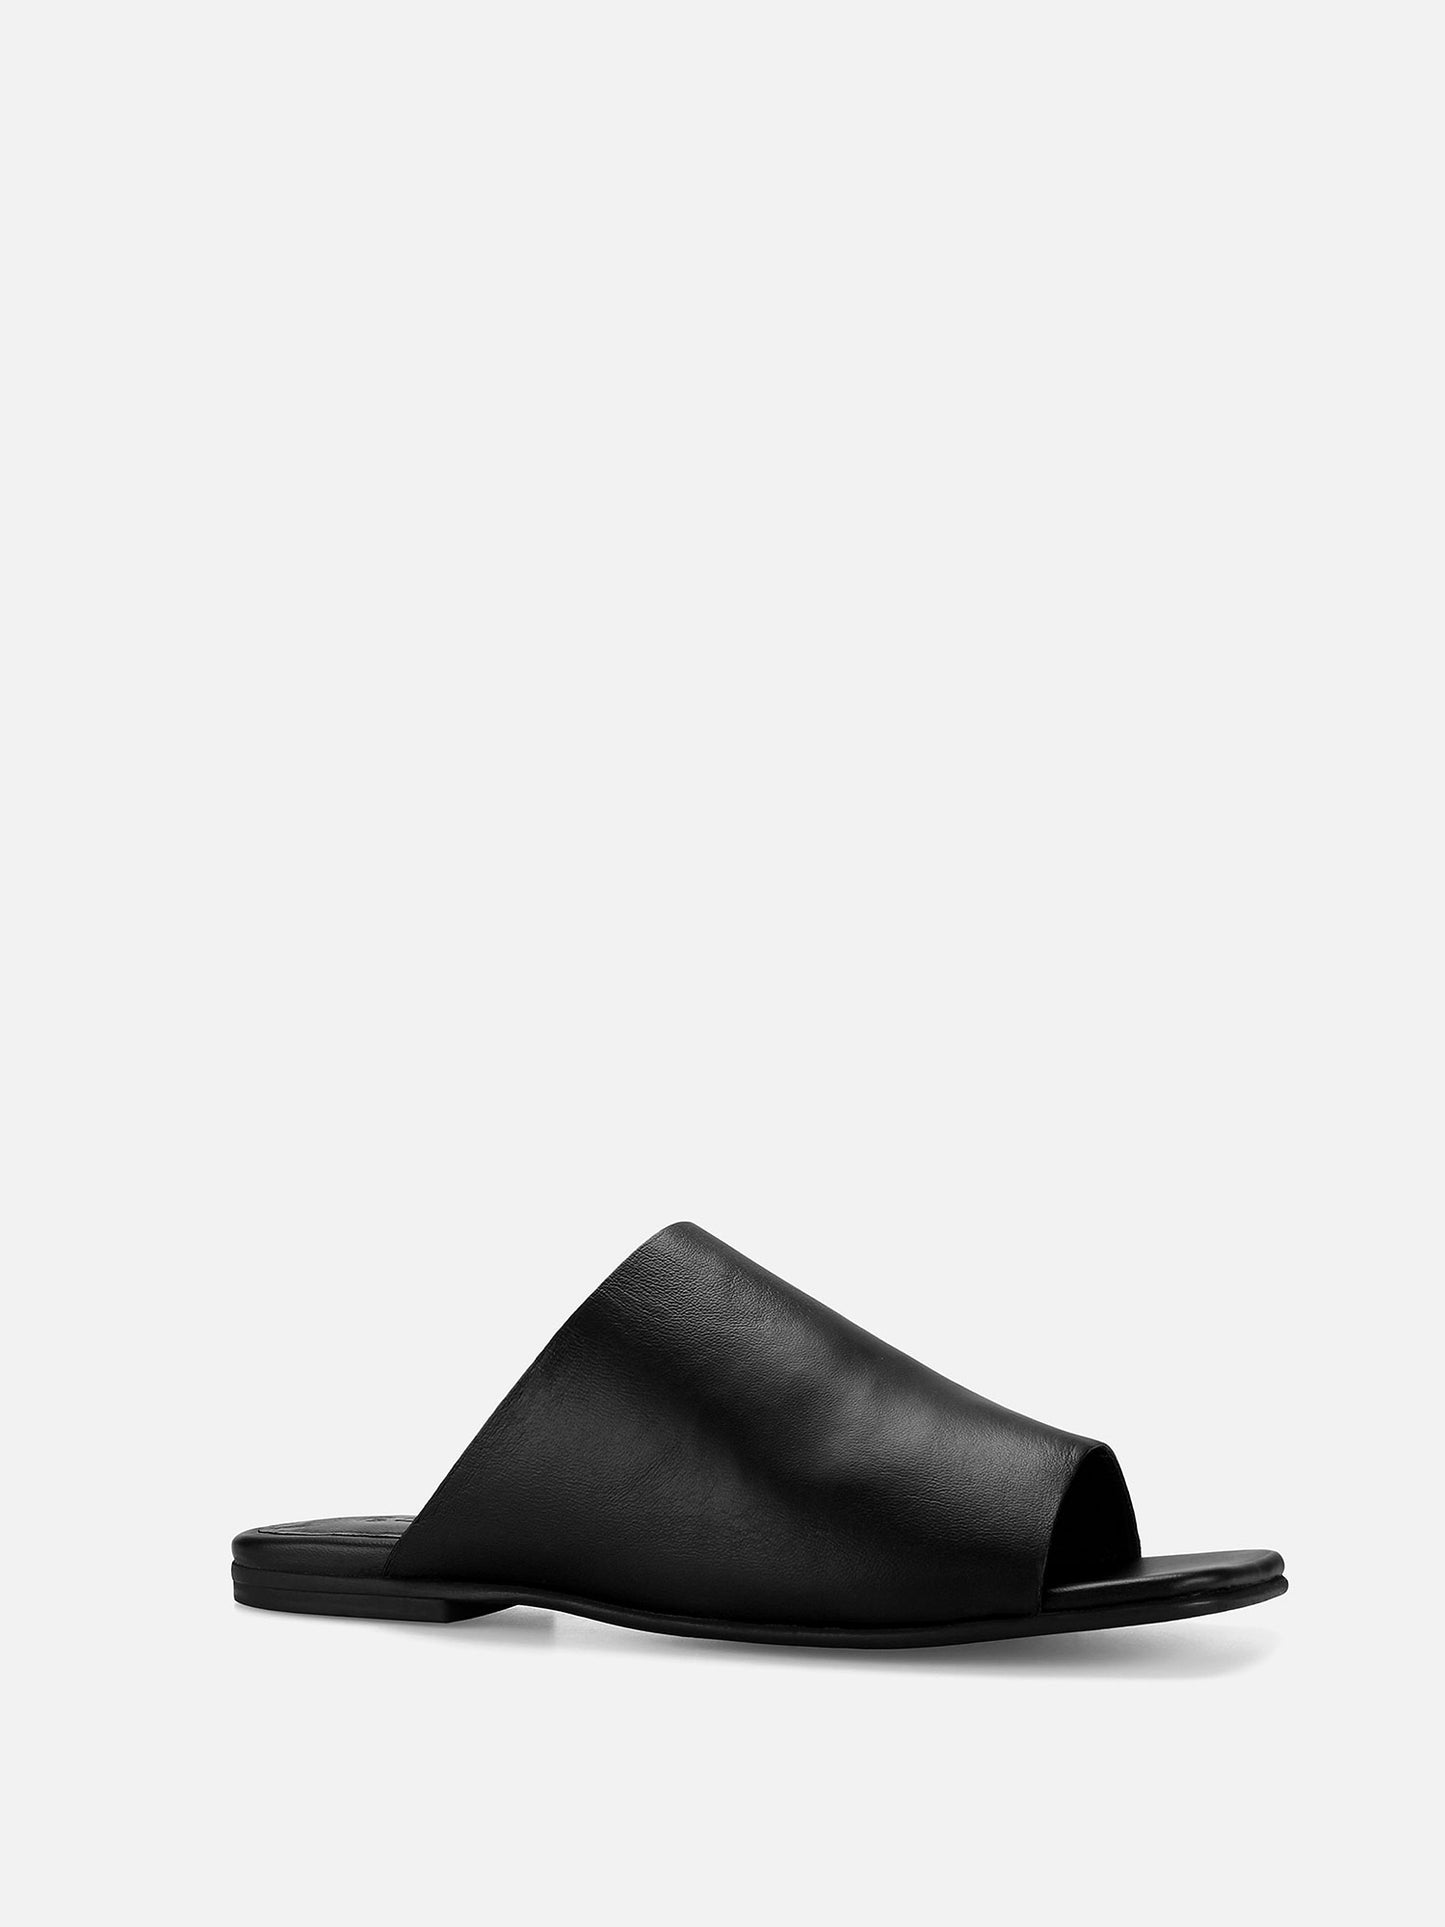 BOREBI Flat Leather Sandals - Black